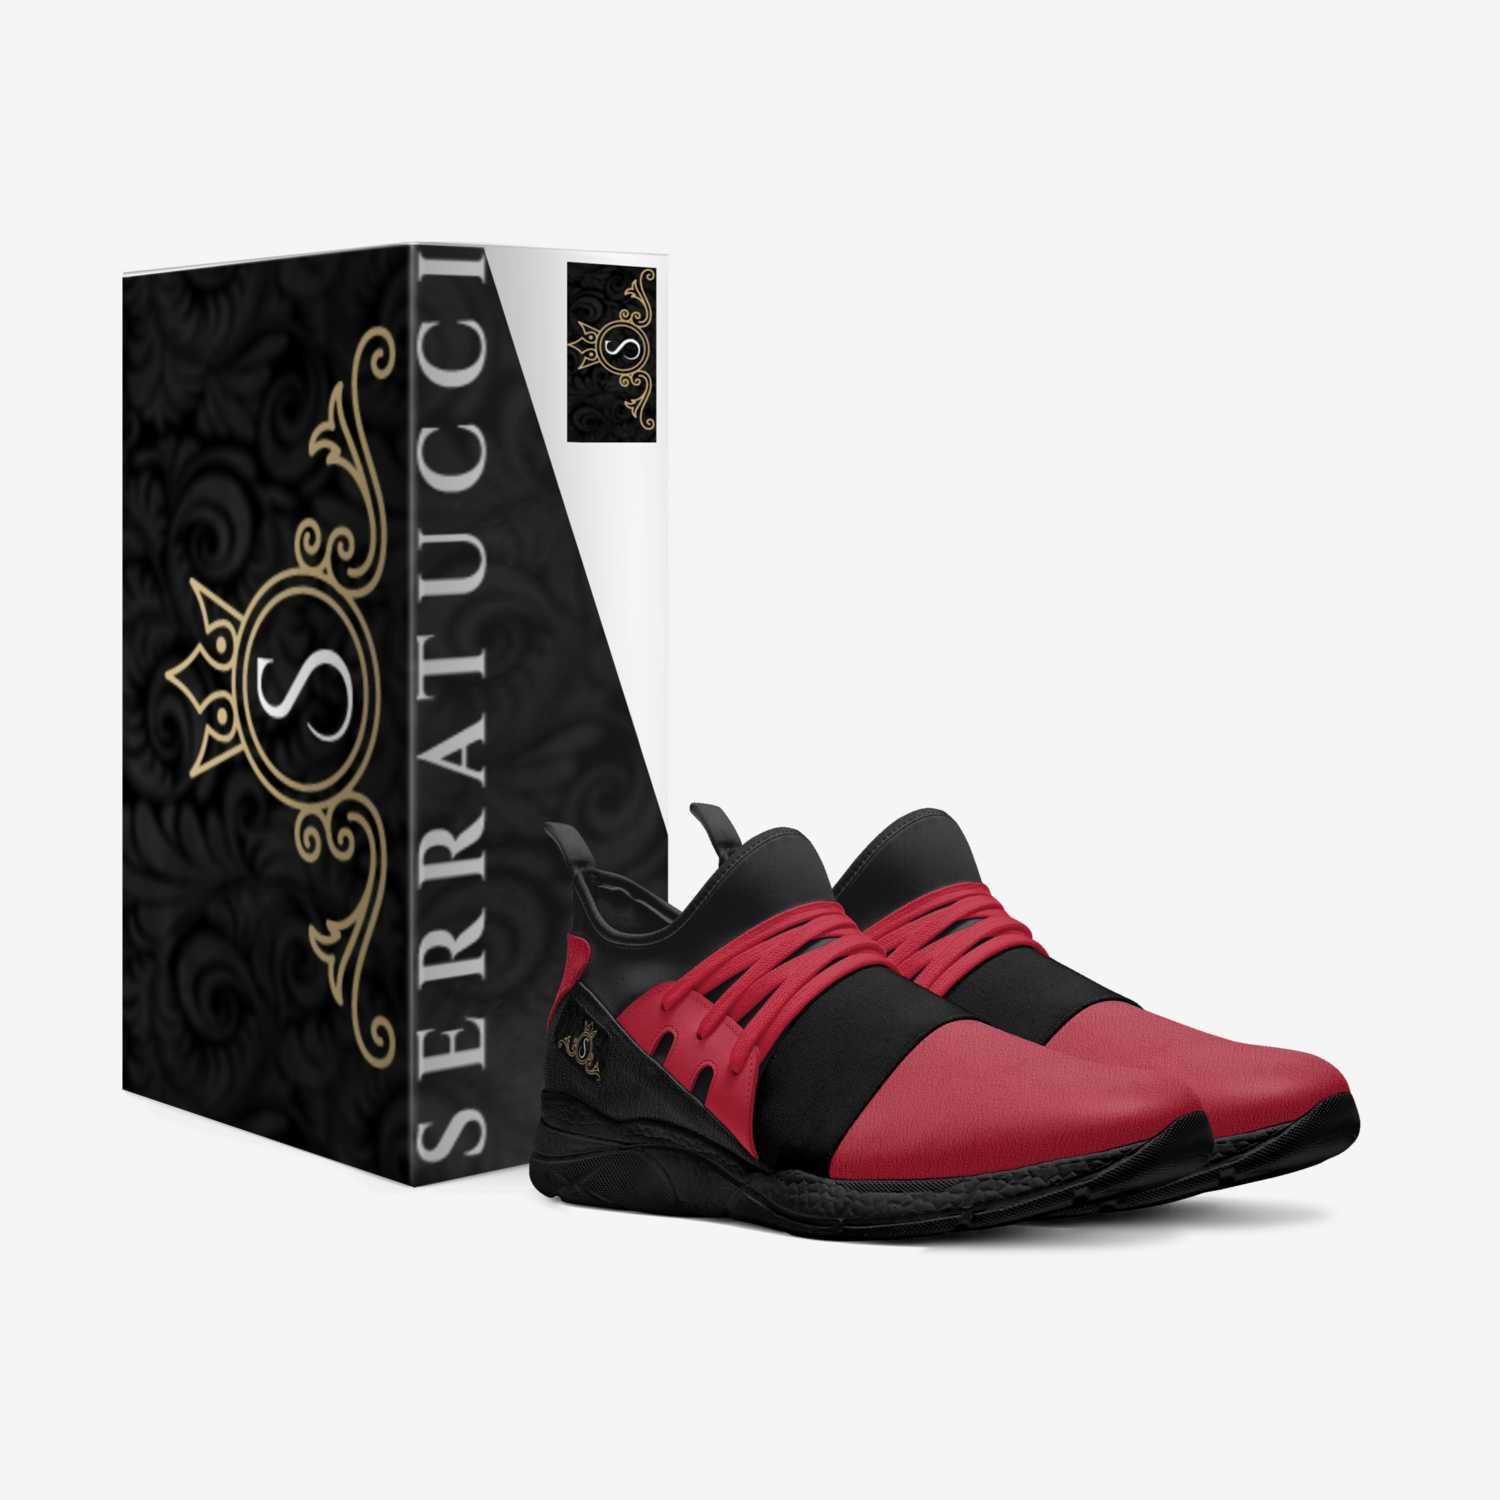 Serratucci custom made in Italy shoes by Simone Serratore | Box view